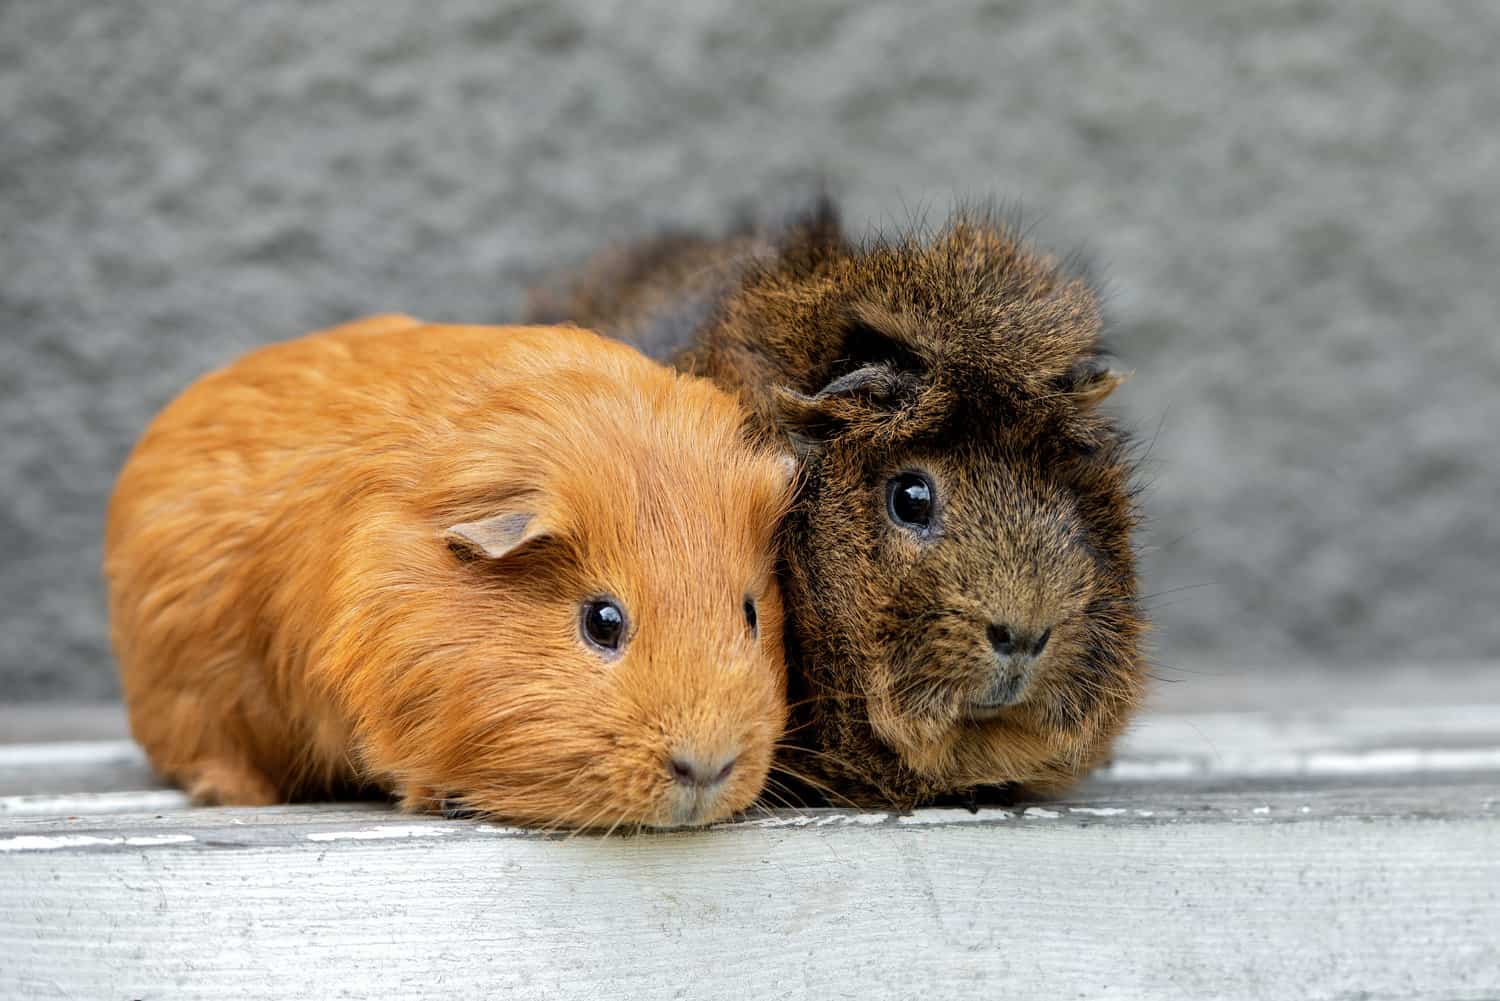 adorable guinea pigs